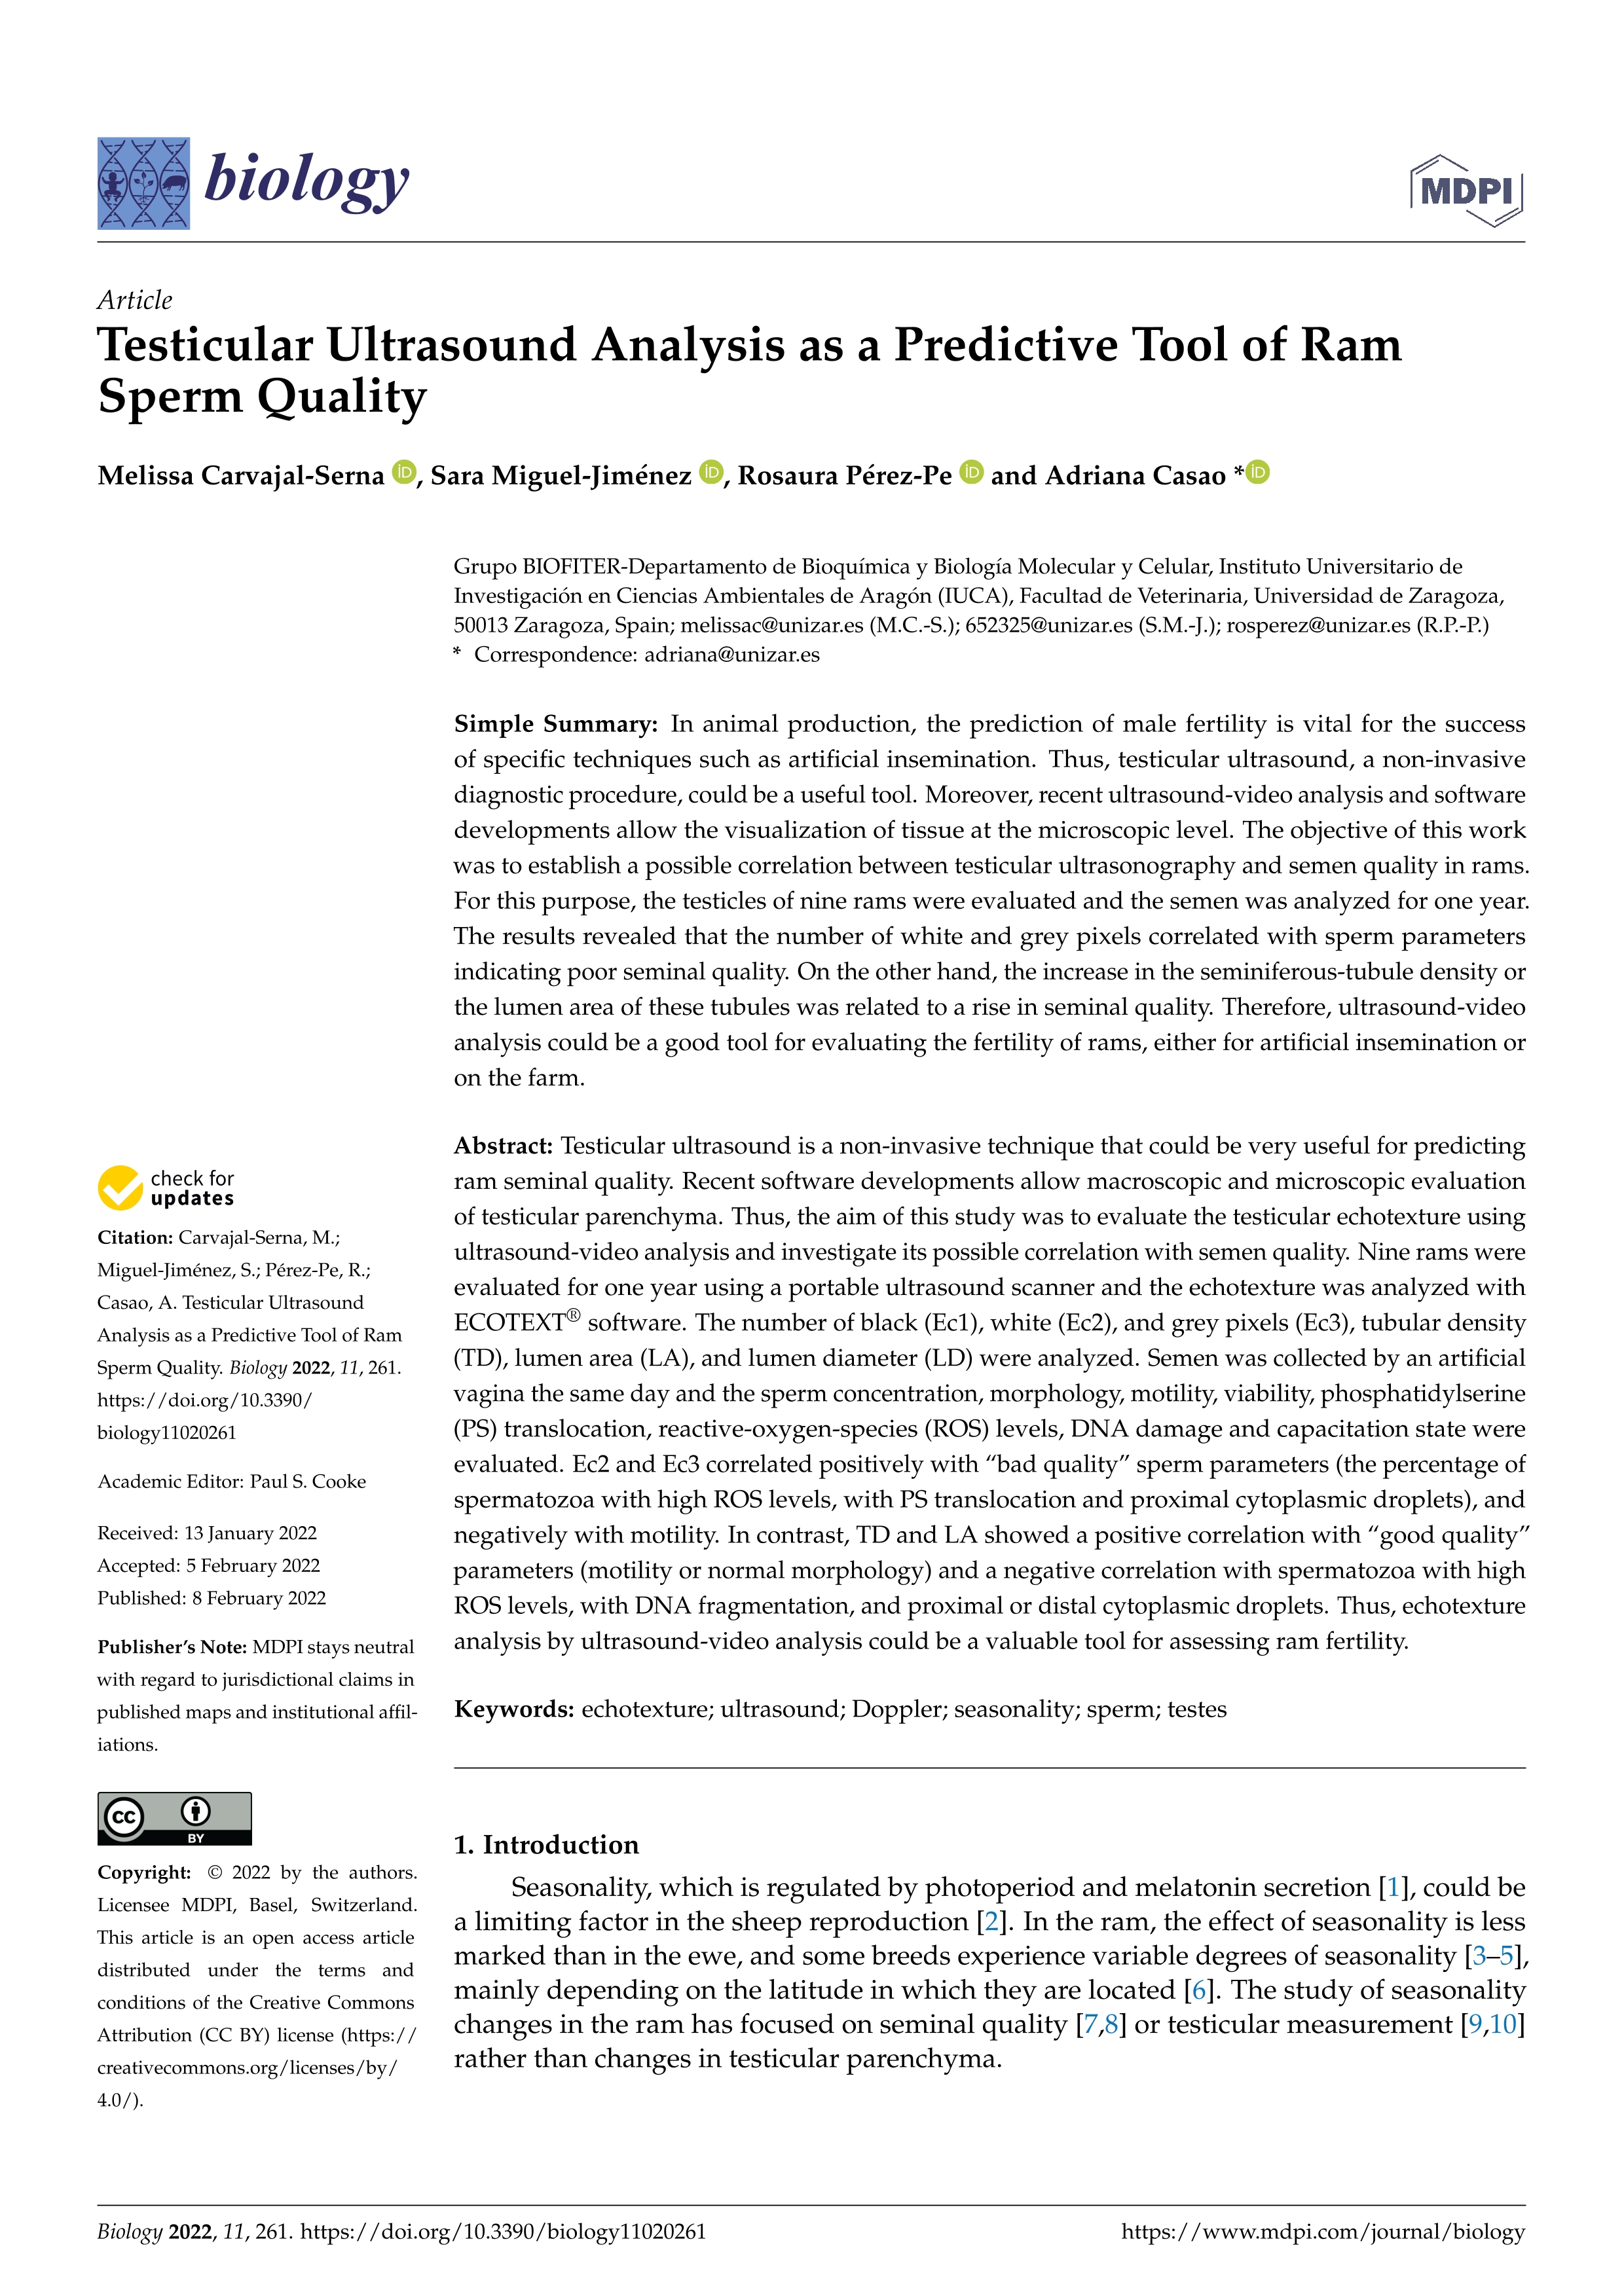 Testicular ultrasound analysis as a predictive tool of ram sperm quality